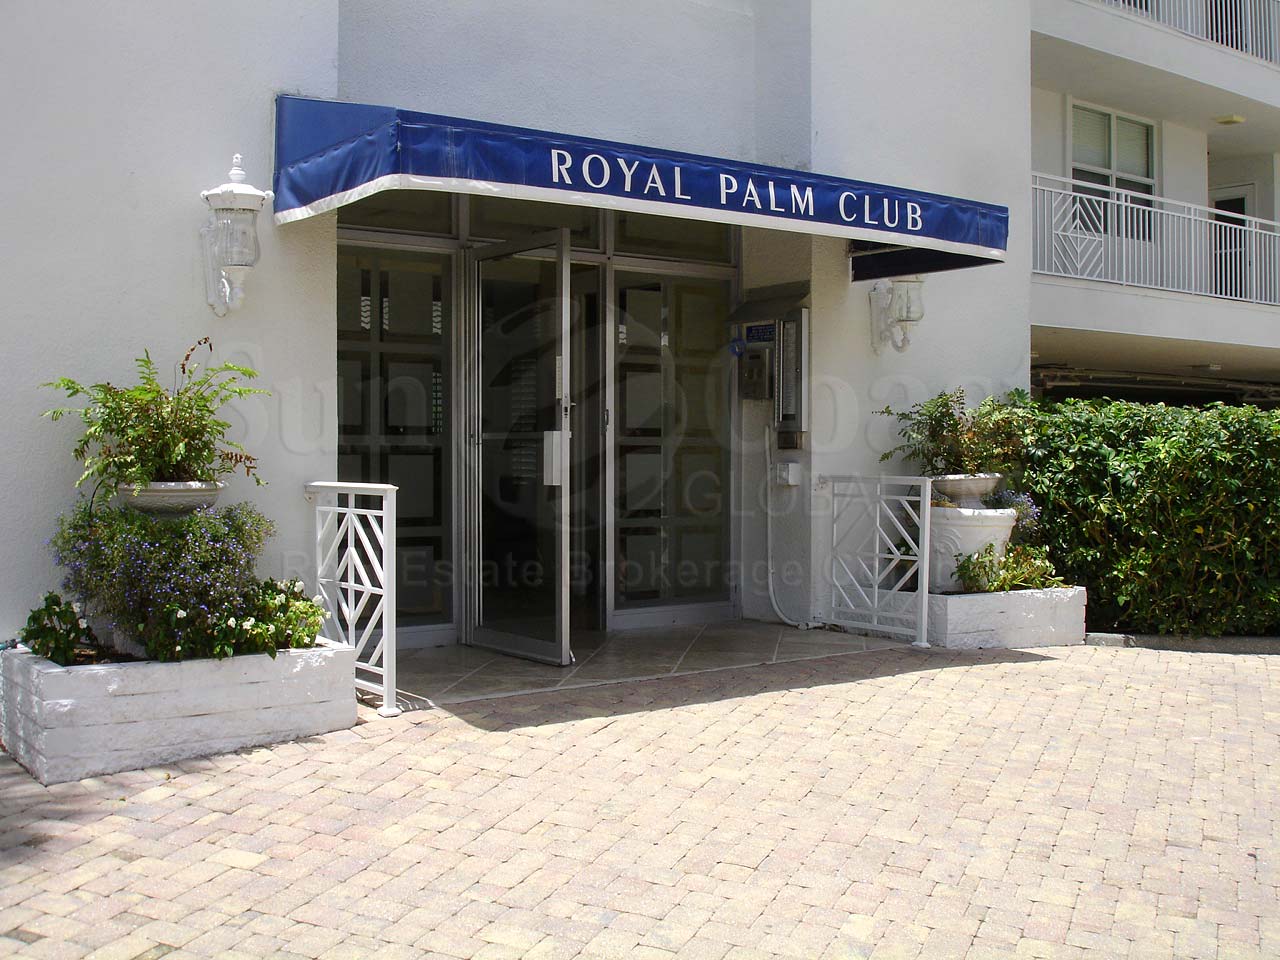 Royal Palm Club Entrance